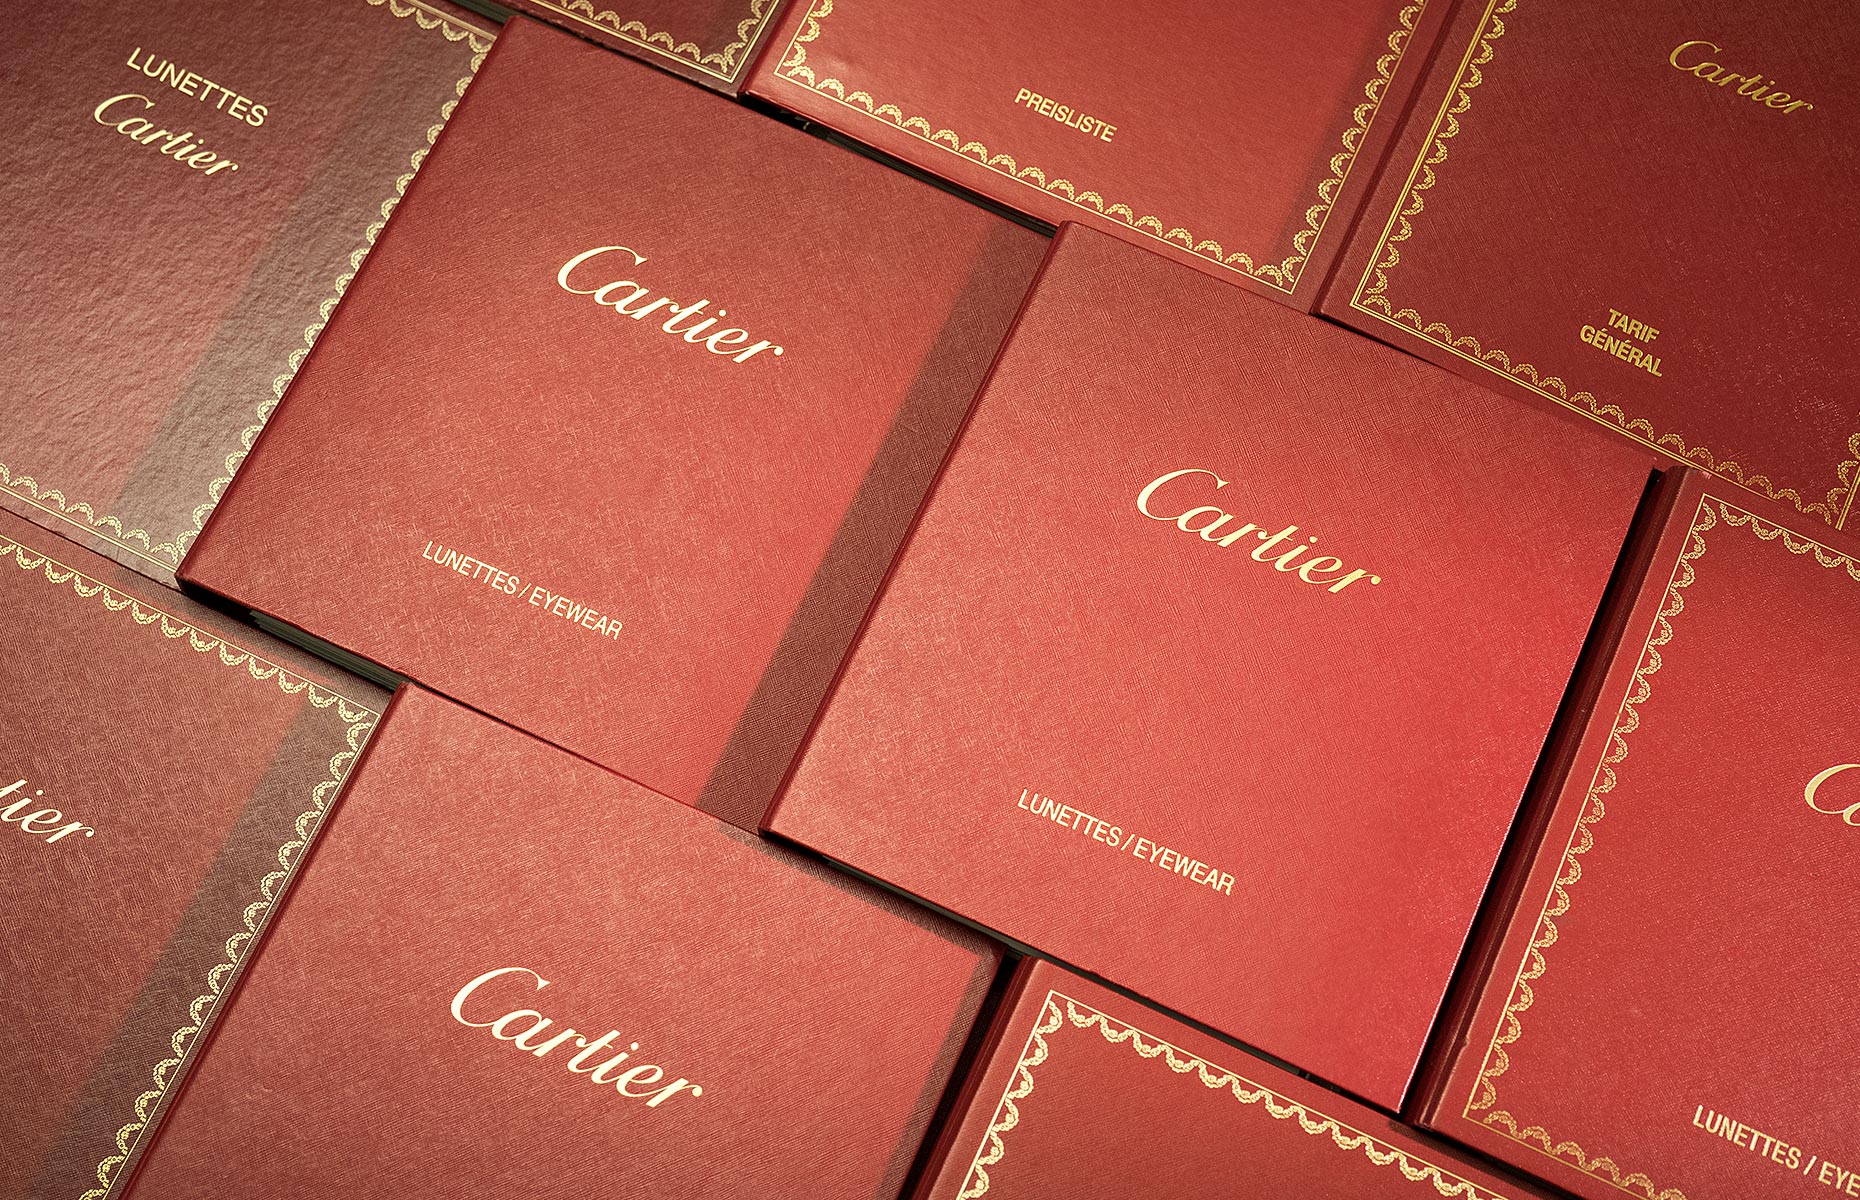 Vintage Cartier eyewear catalogues